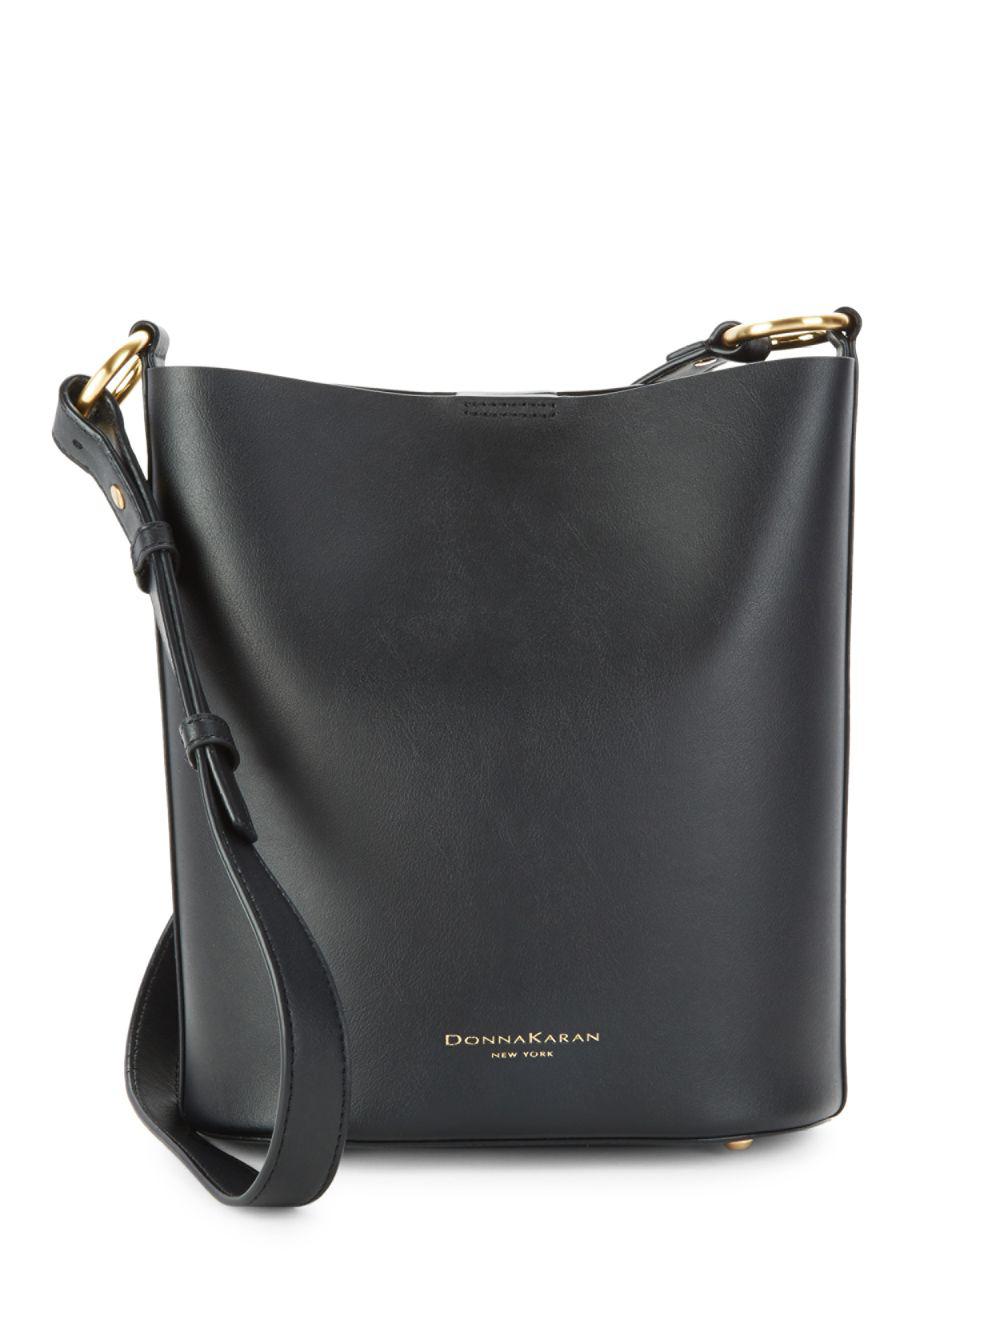 Donna Karan Leather Bucket Bag in Black | Lyst